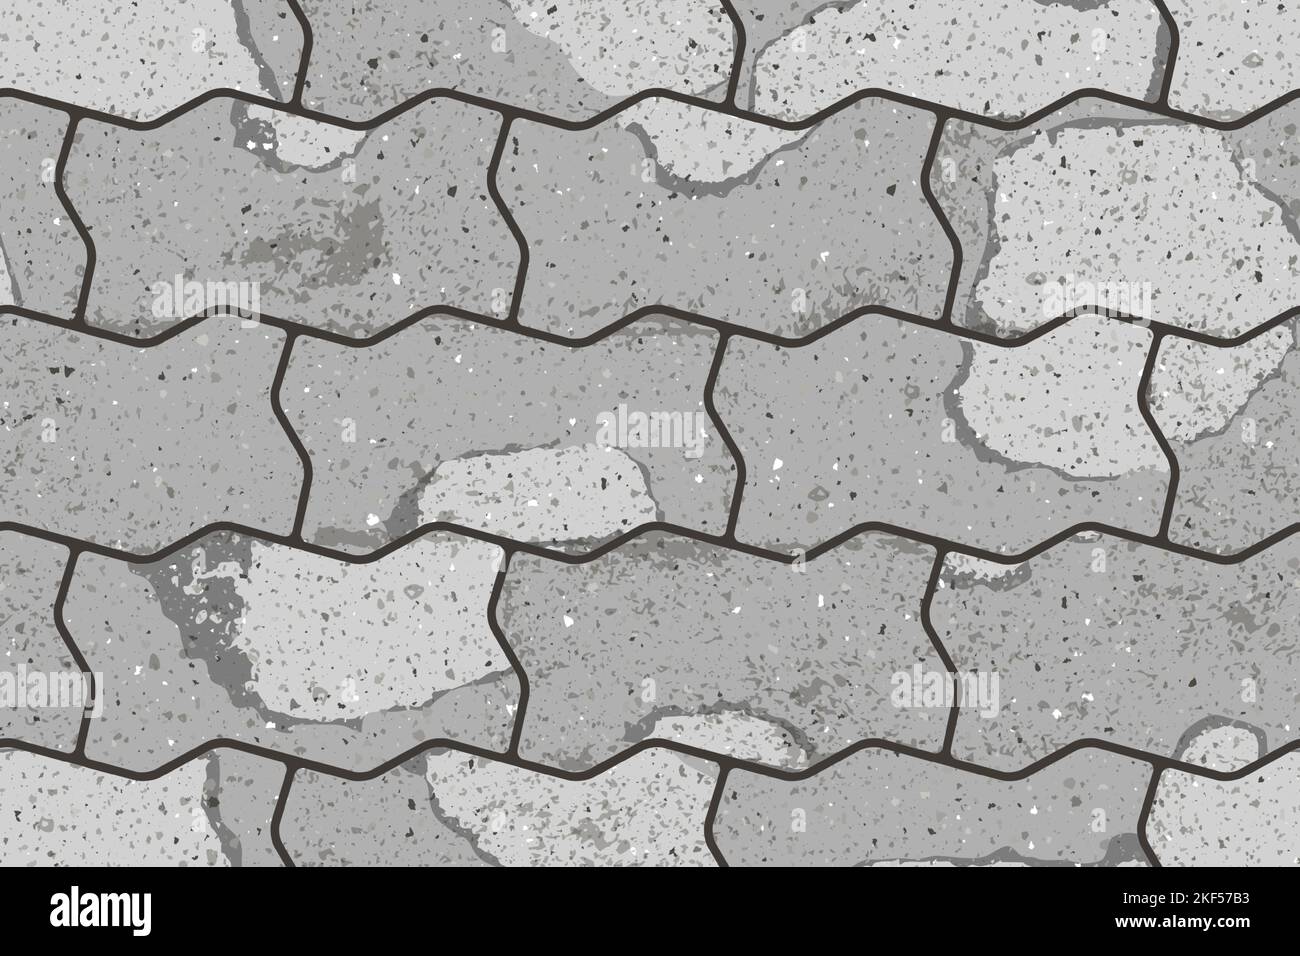 Seamless pattern of pavement with figured interlocking textured cracked old bricks Stock Vector